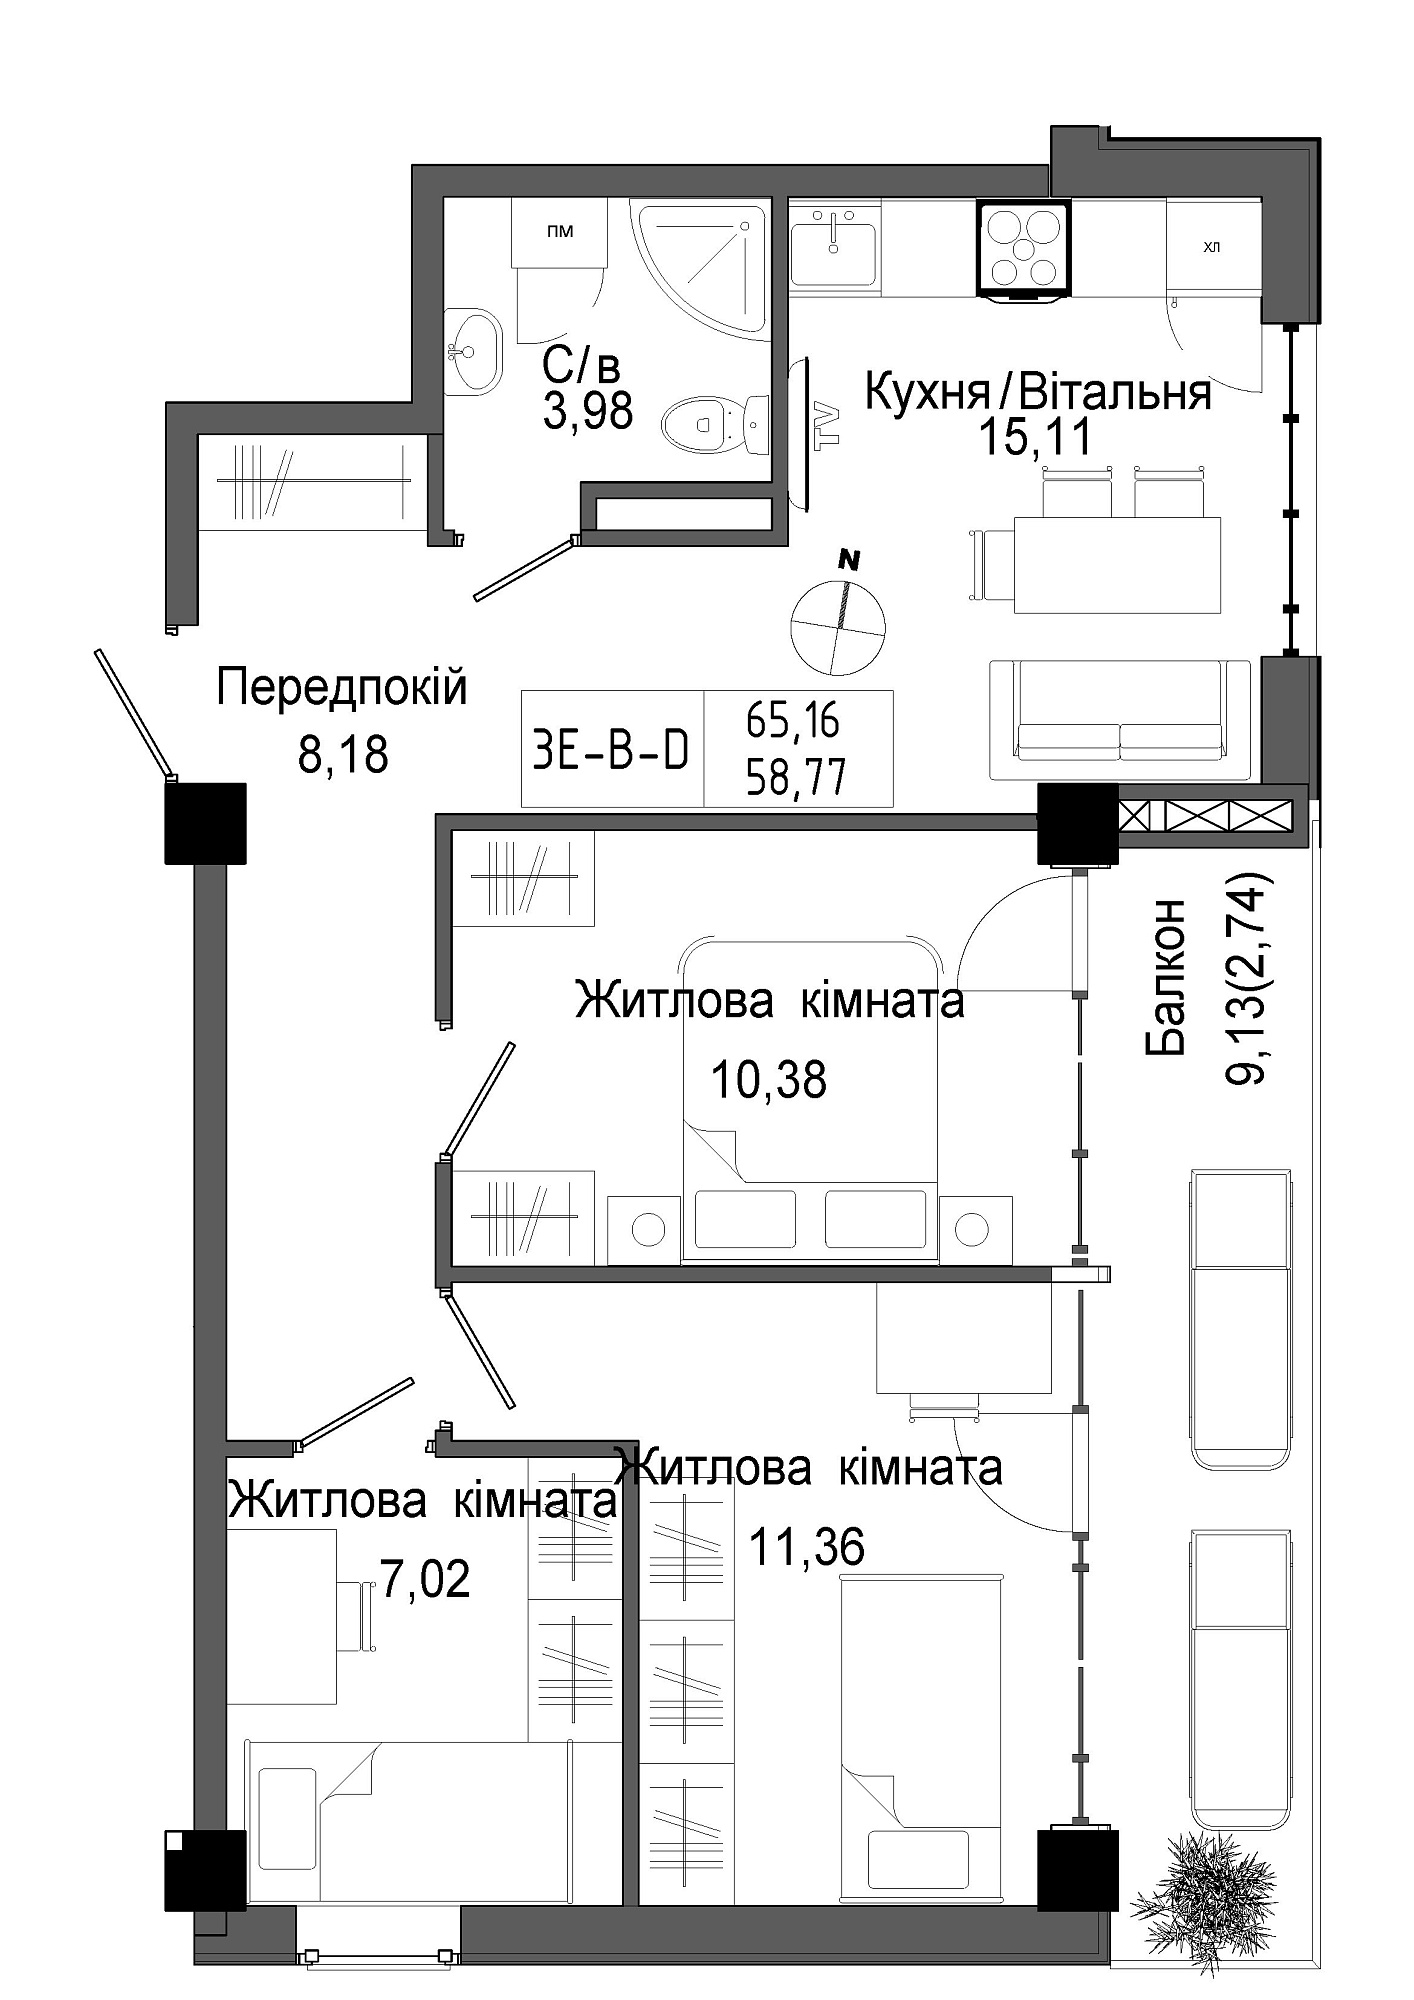 Планування 3-к квартира площею 58.77м2, UM-006-09/0004.